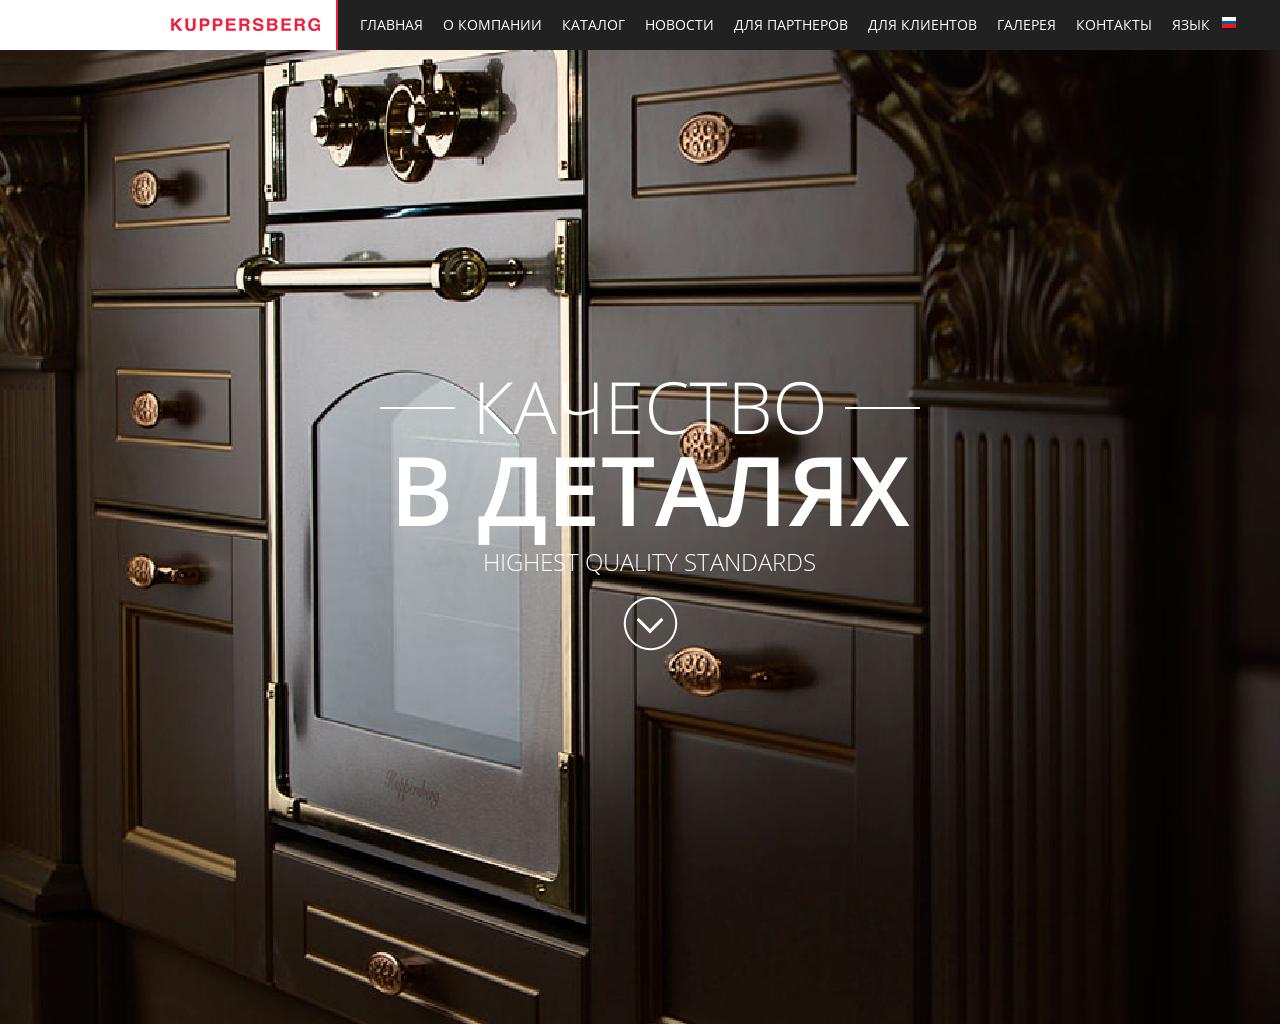 Изображение сайта kuppersberg.ru в разрешении 1280x1024